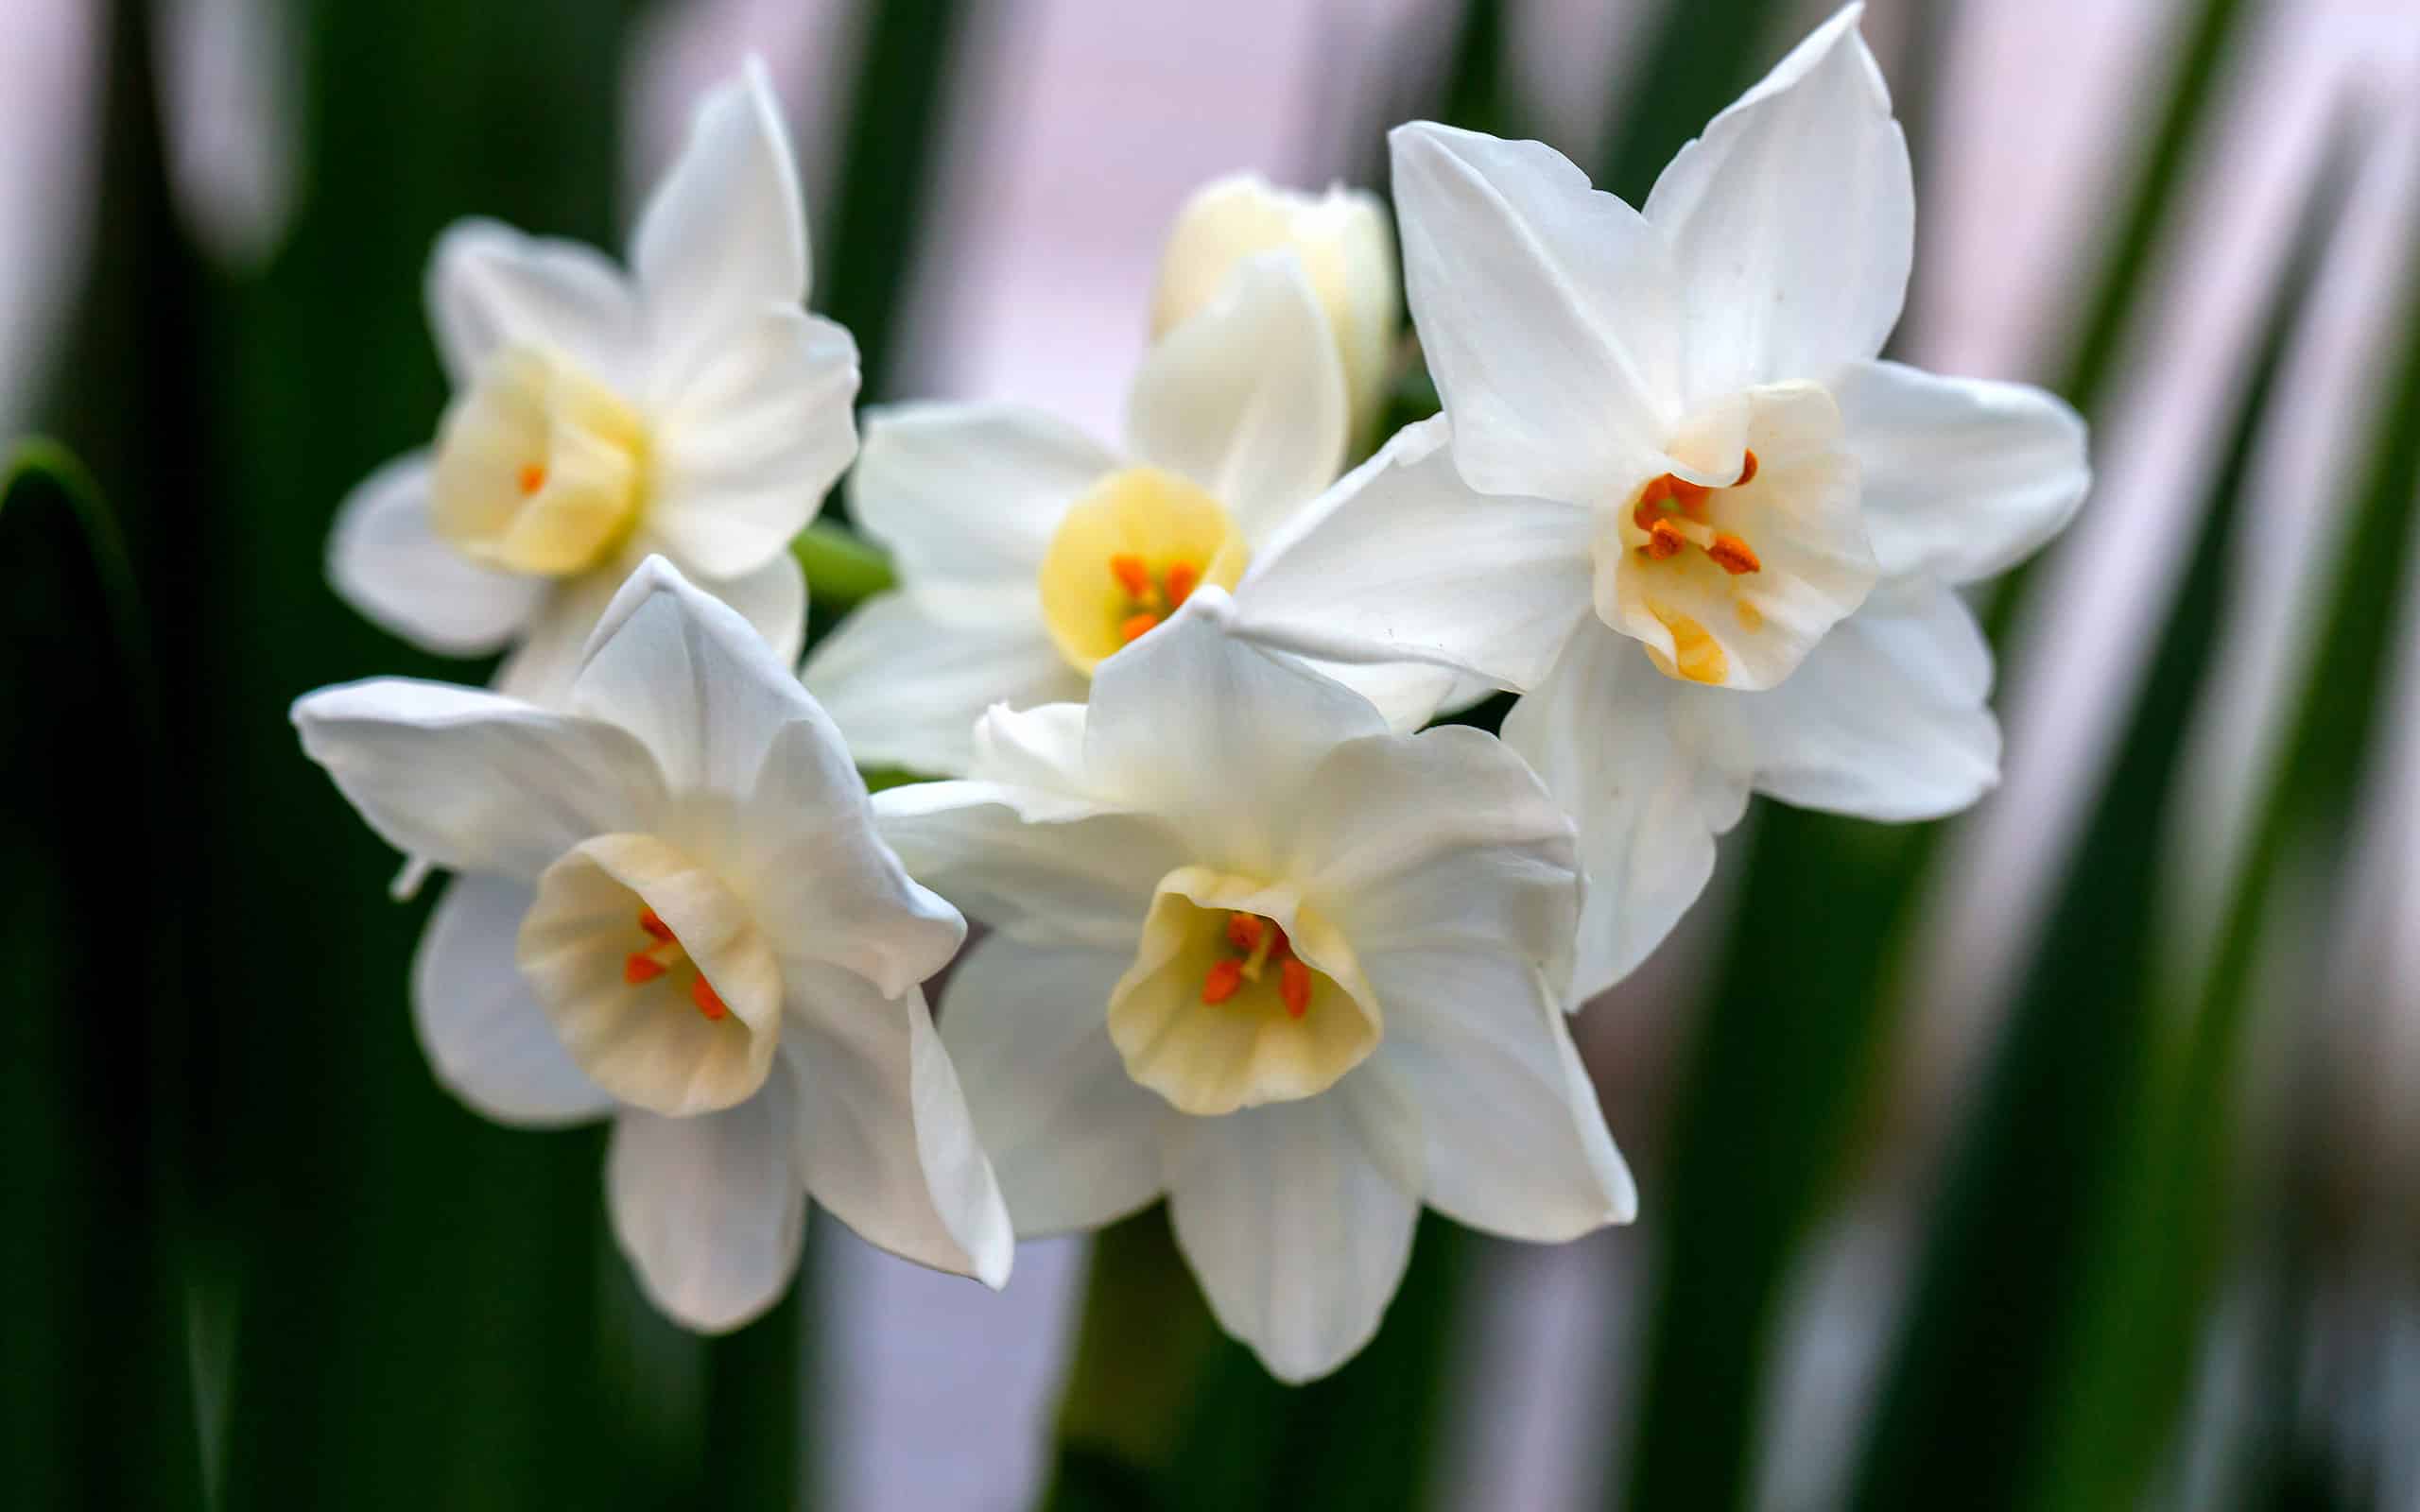 White narcissus Paperwhite Ziva (Narcissus poeticus) in garden